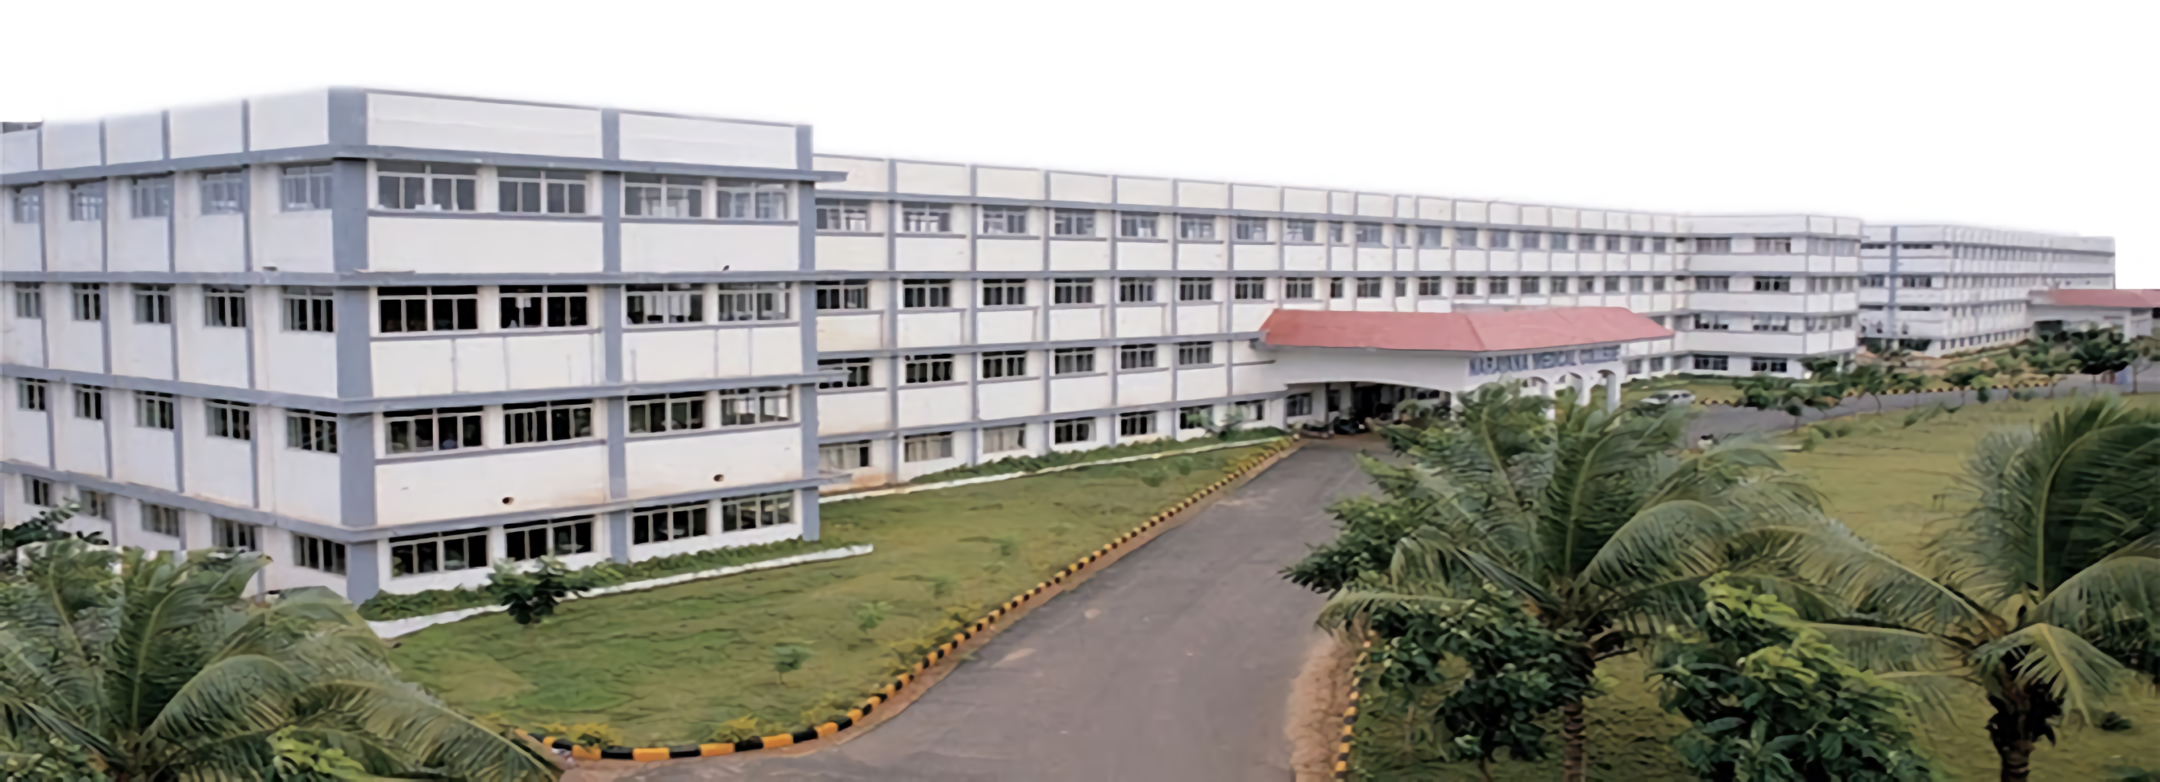 Narayana General Hospital And Super Speciality Hospital - Chintareddypalem